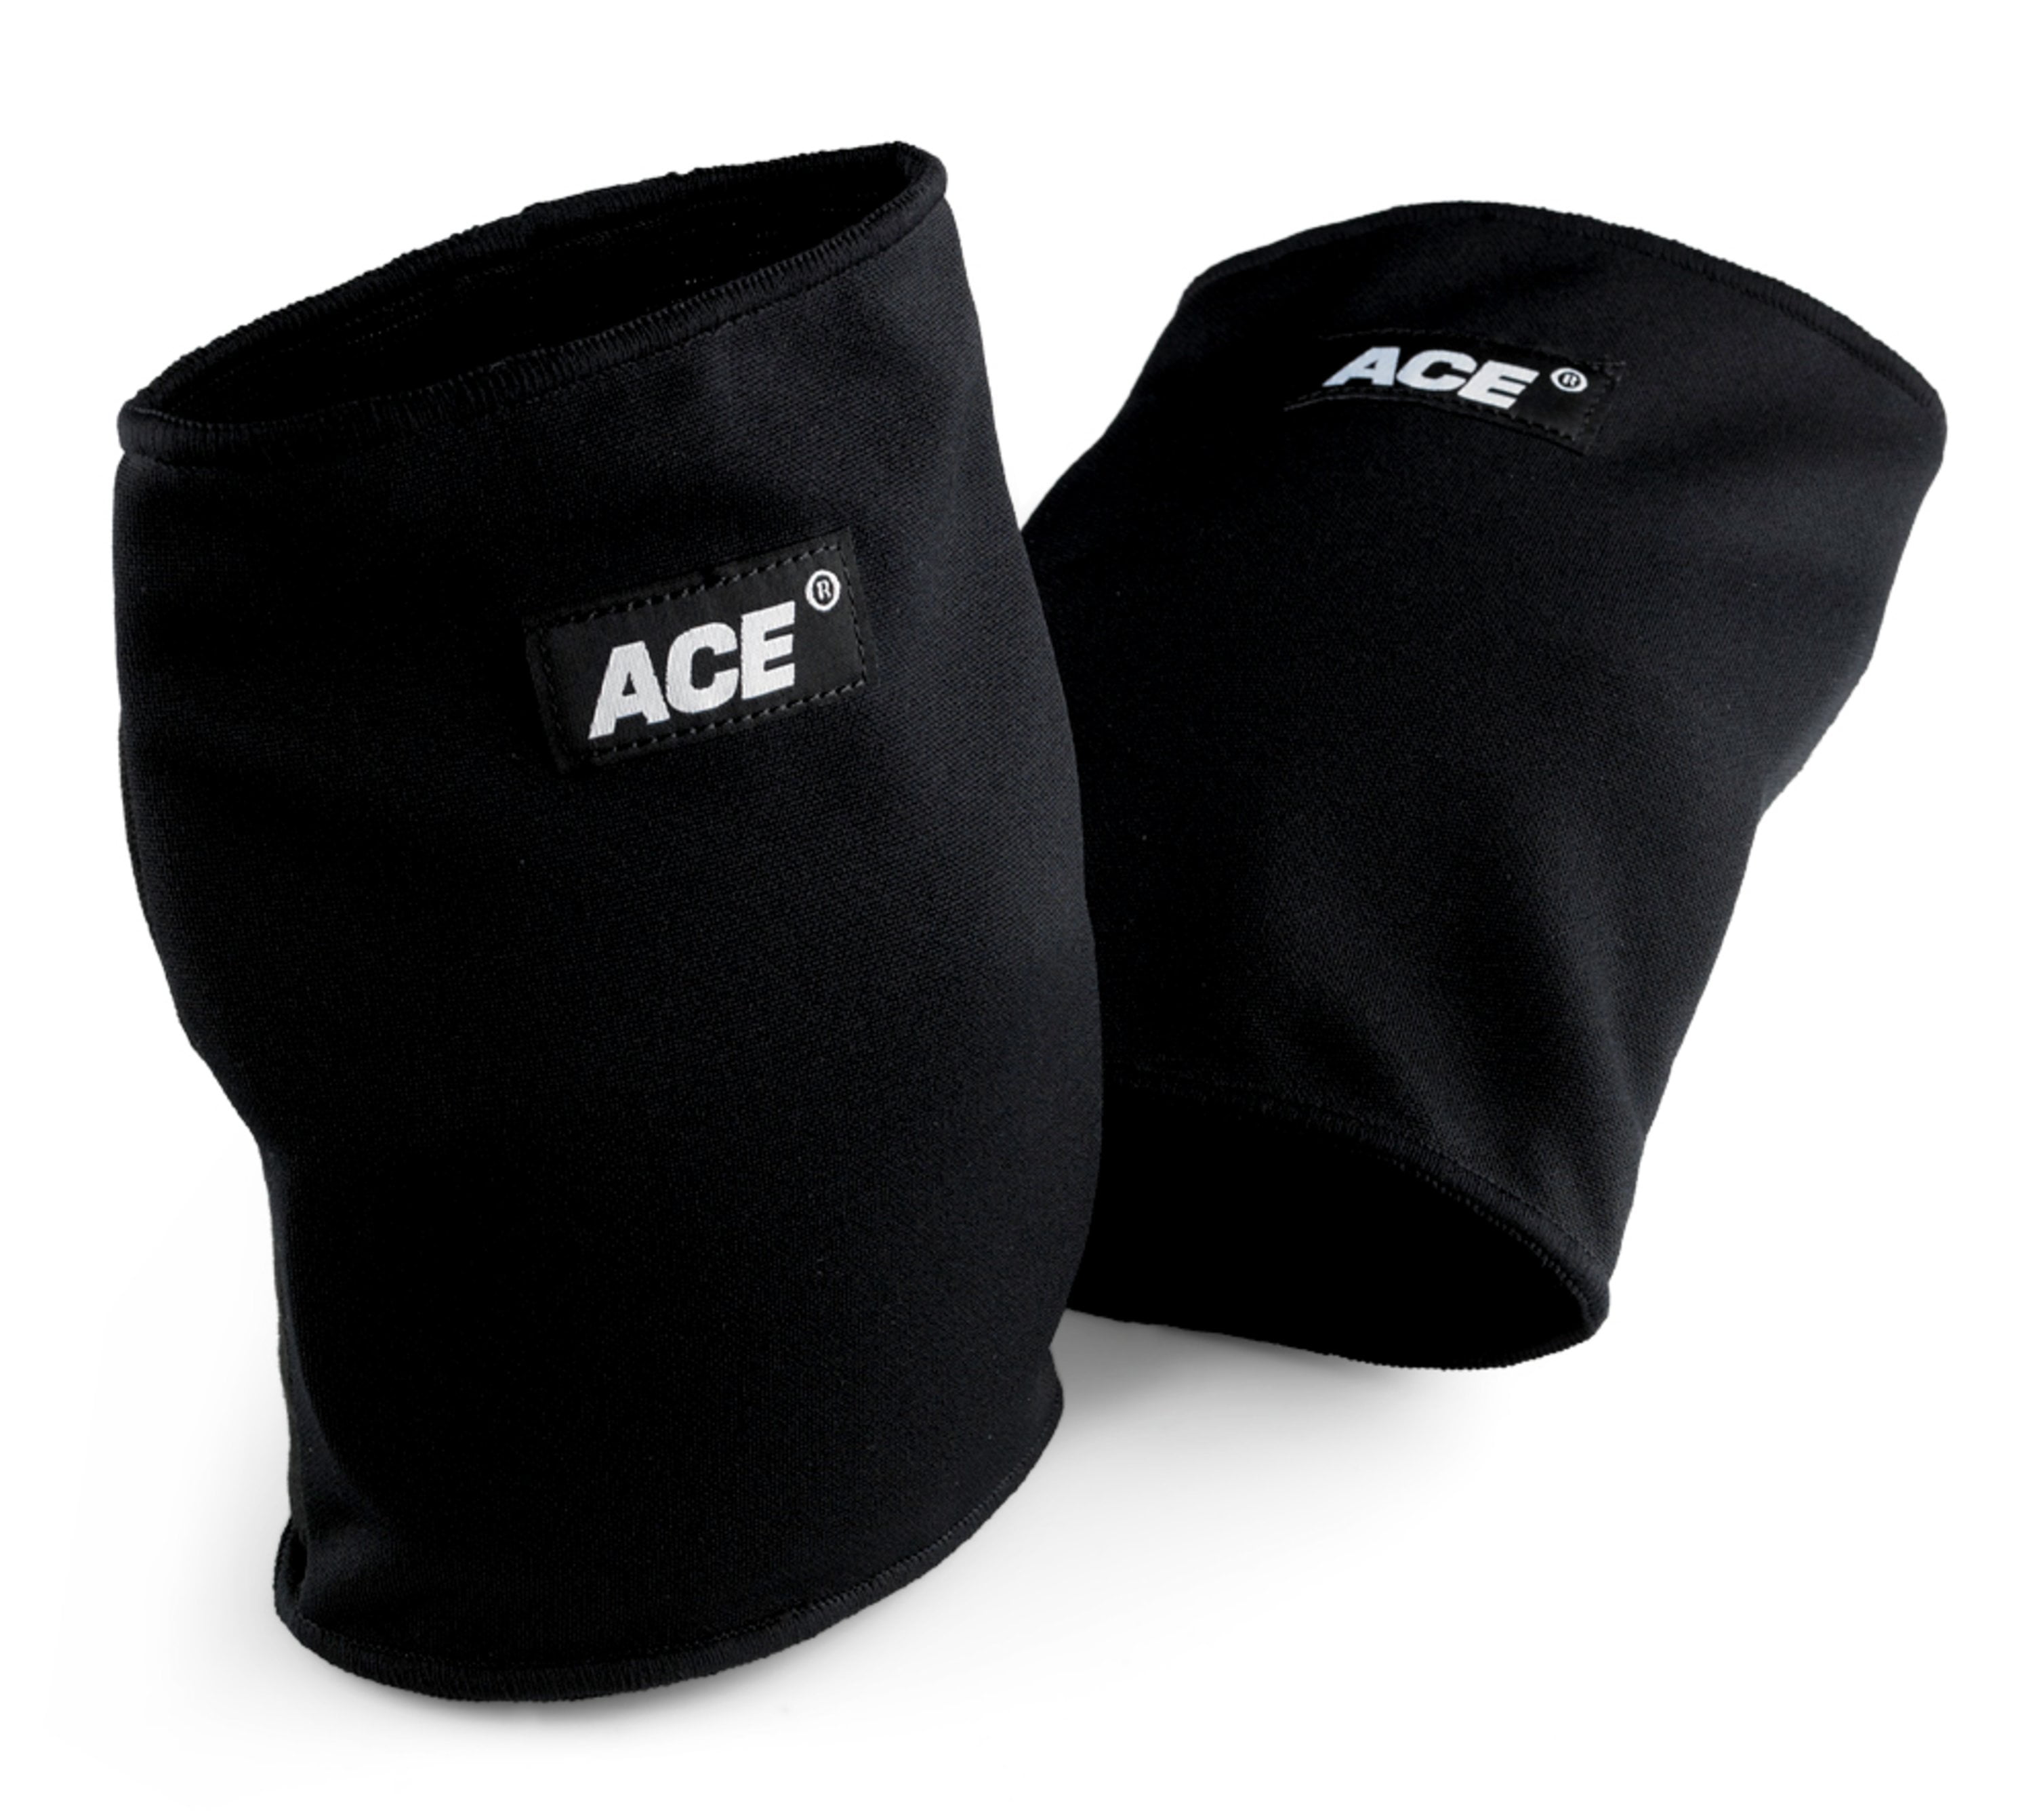 ACE Brand Knee Pads, Shock-Absorbing 